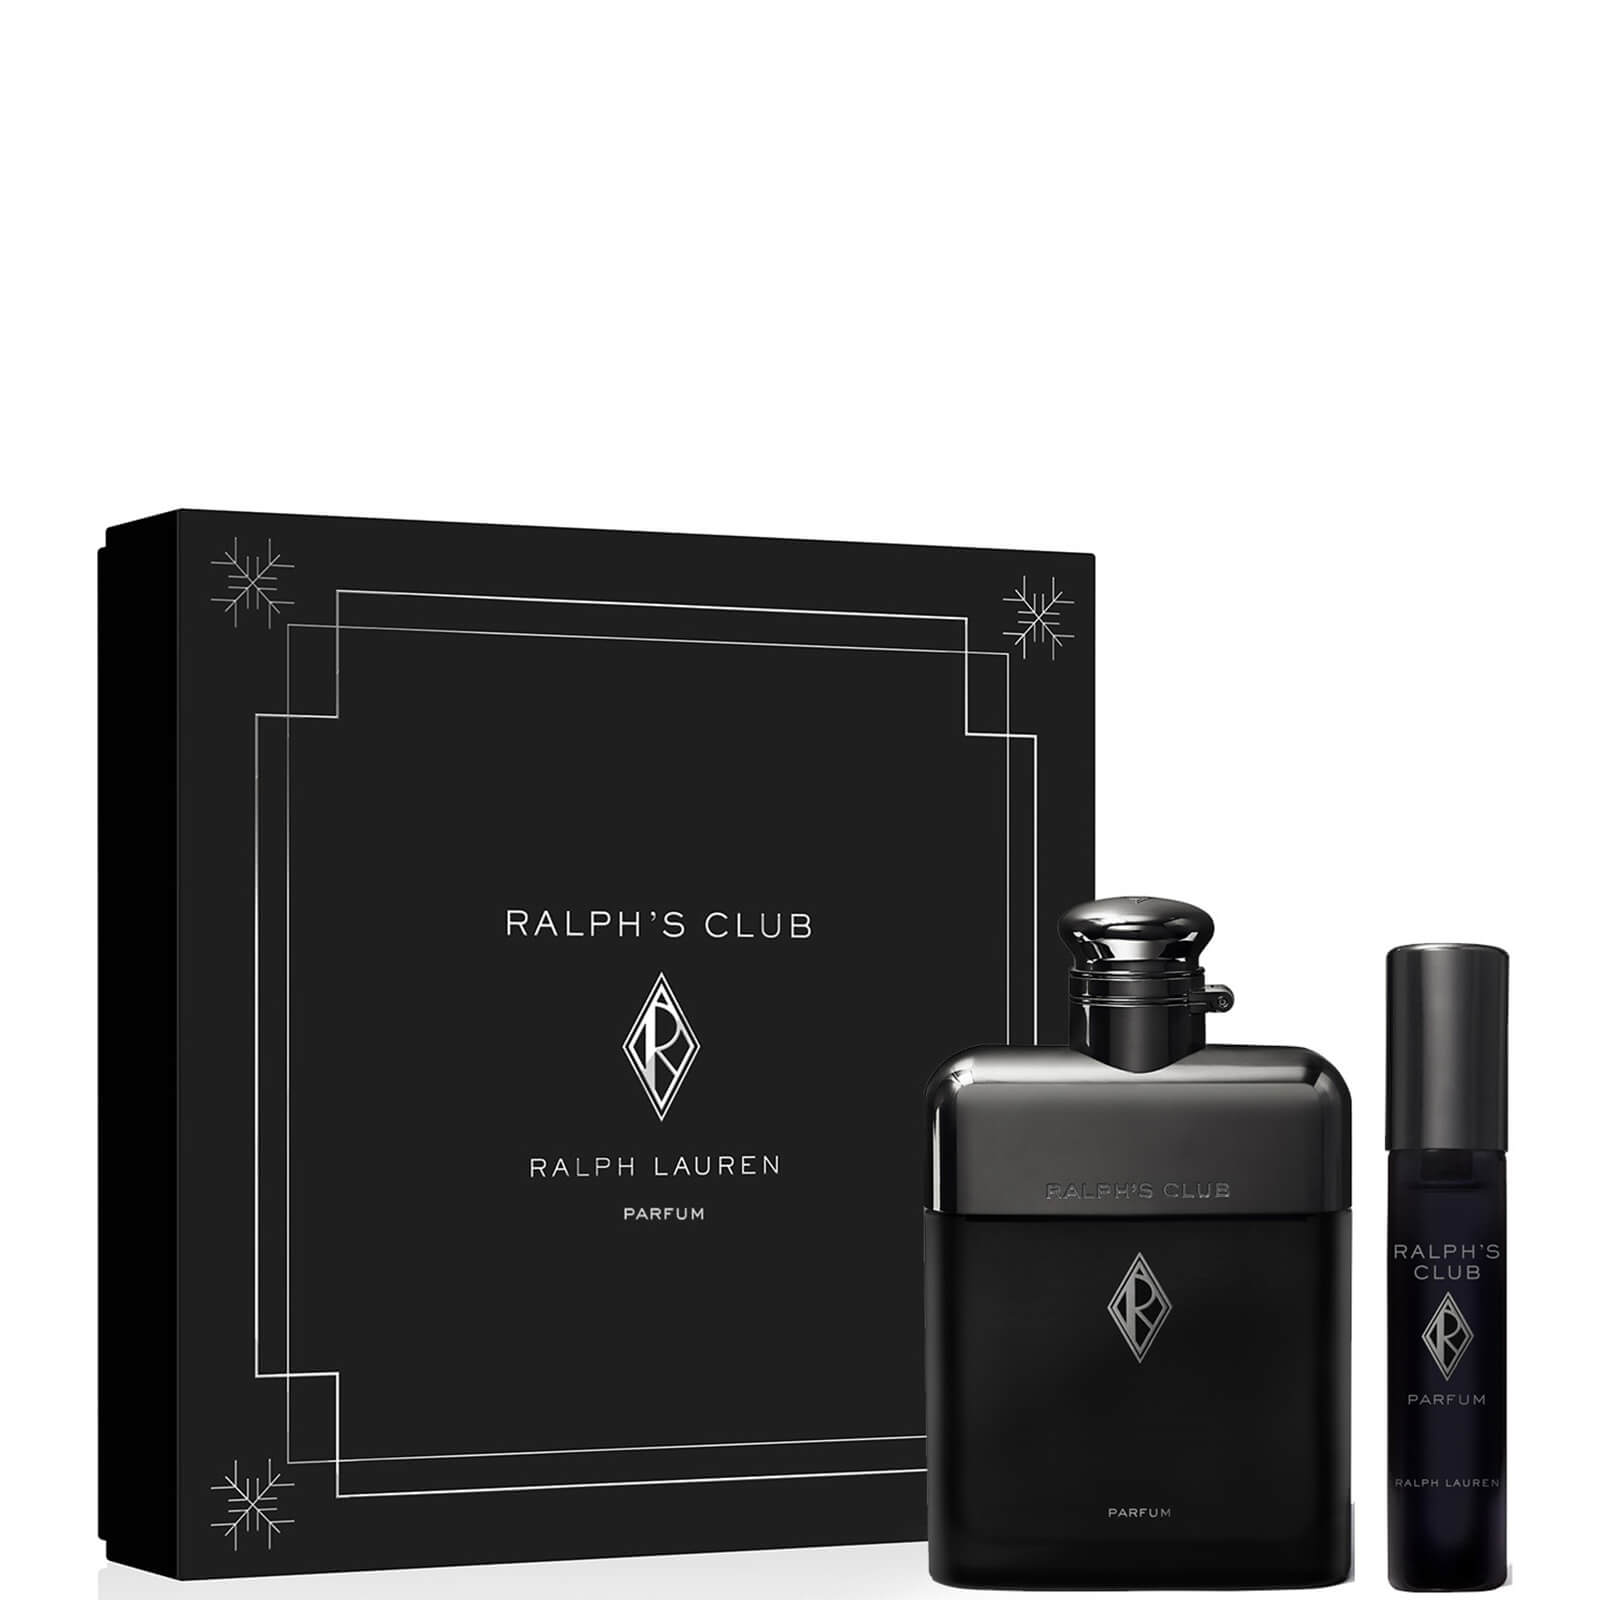 Image of Ralph Lauren Ralph's Club Parfum 100ml and Travel Size 10ml